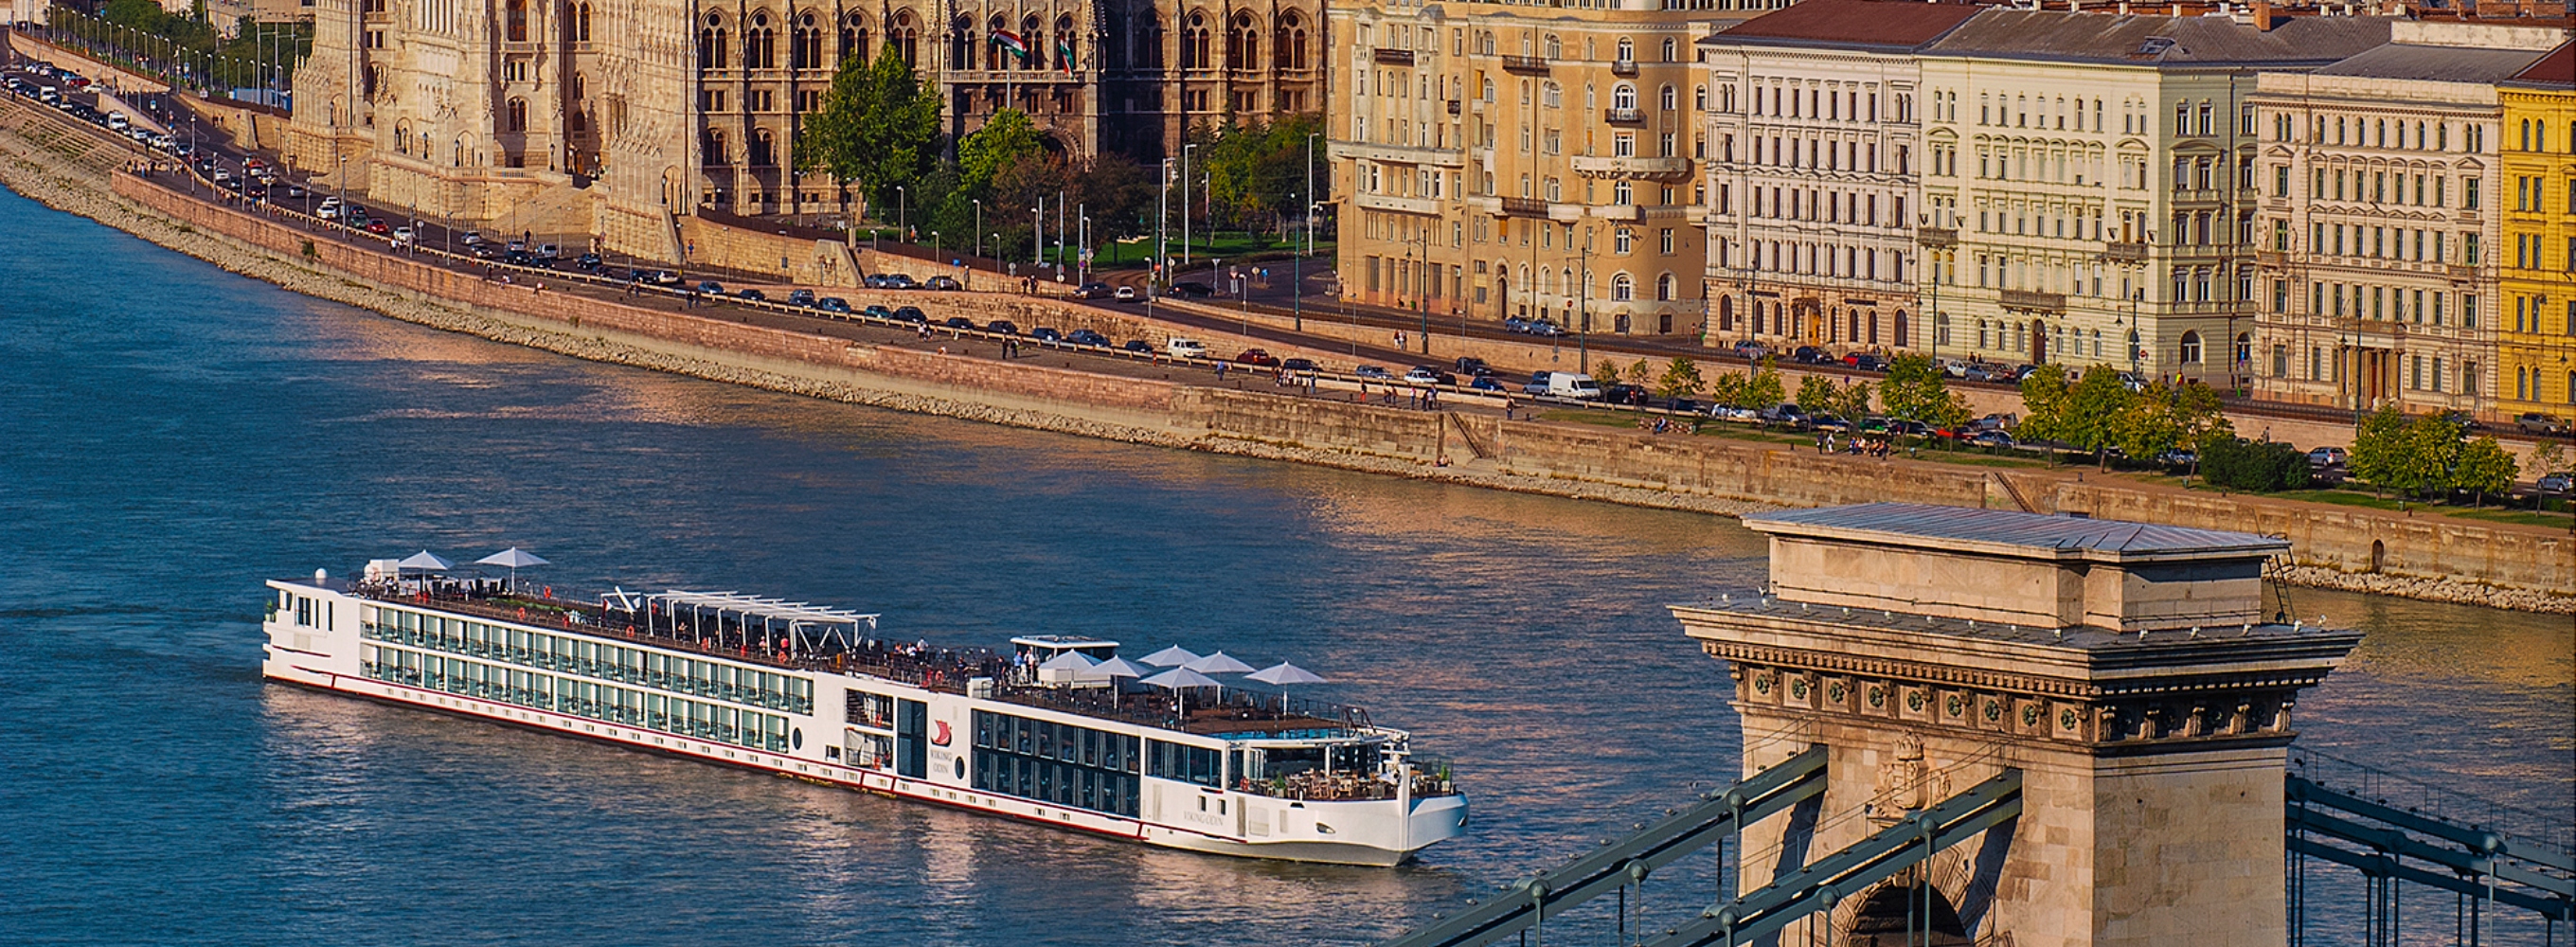 Luxury Cruise Connections Viking River Cruises * Romantic Danube